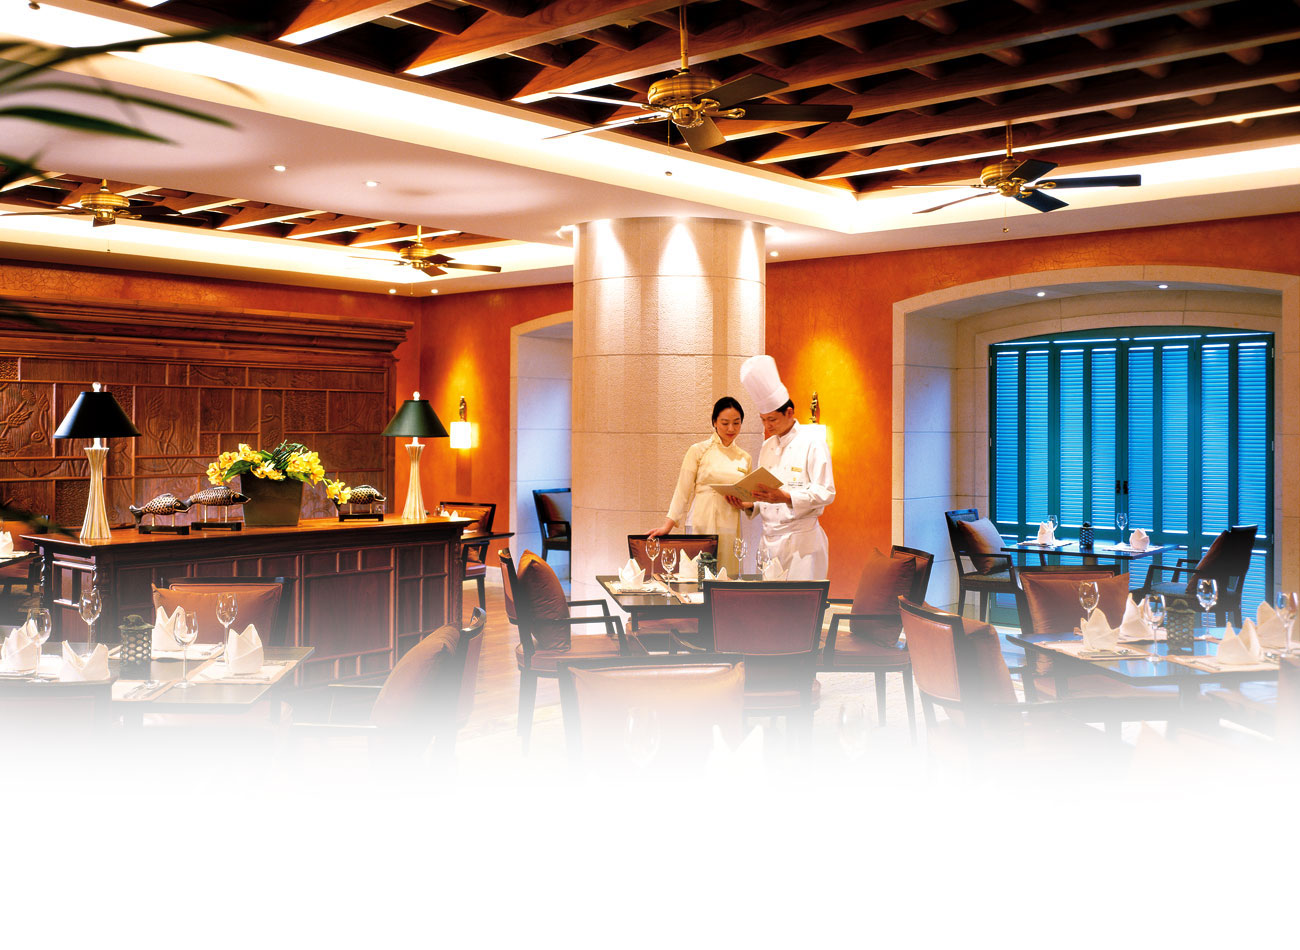 Dubai Restaurants  Dining at Shangri-La Hotel Dubai